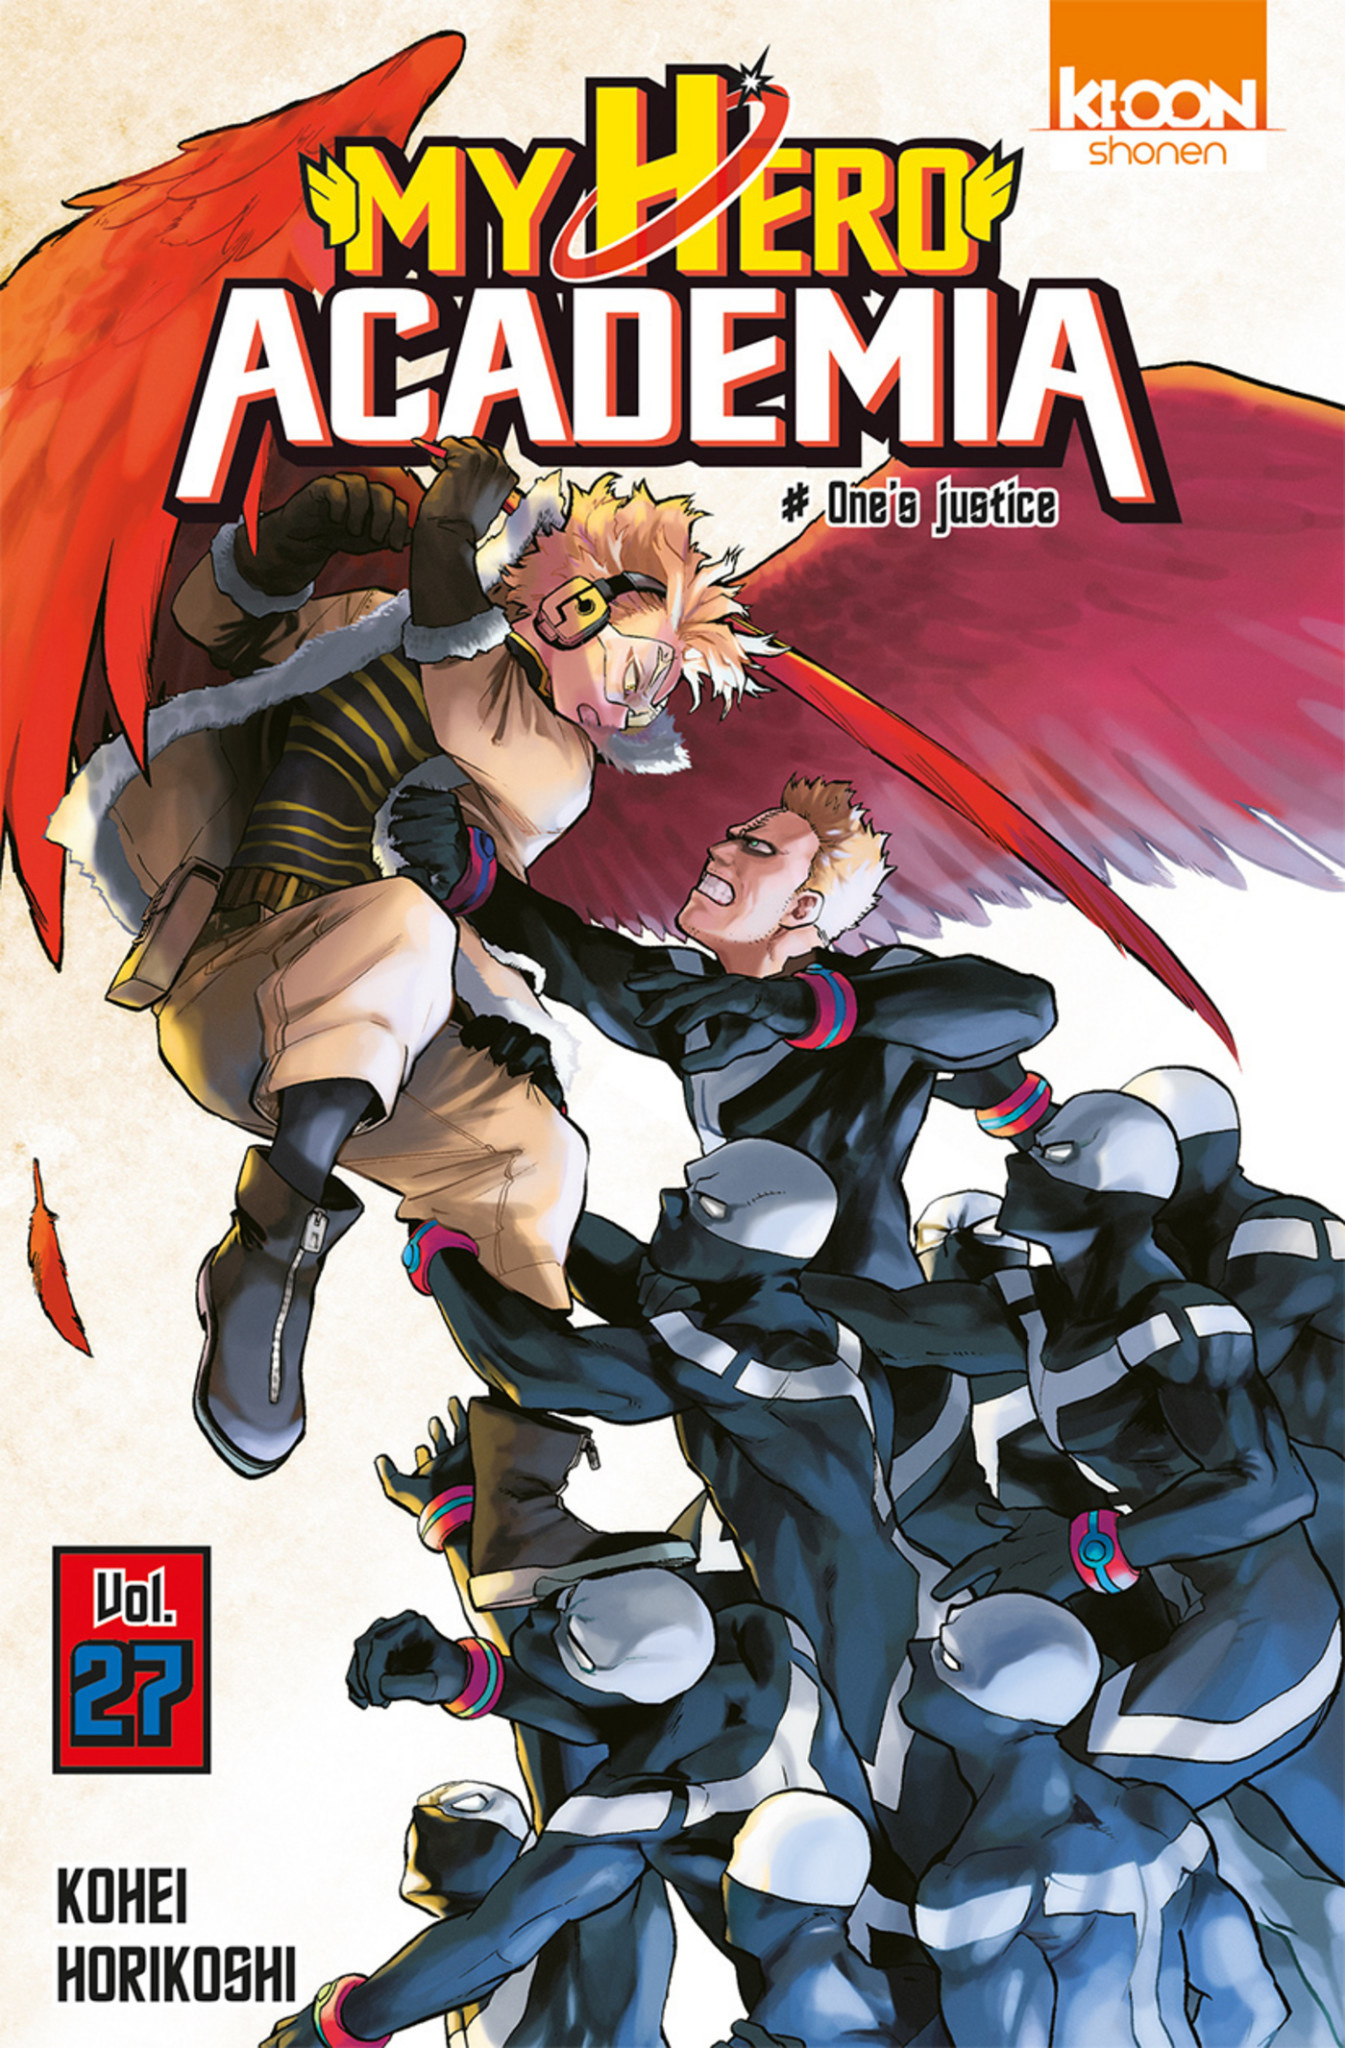 Ki-oon Manga - My Hero Academia Tome 27 : One's justice